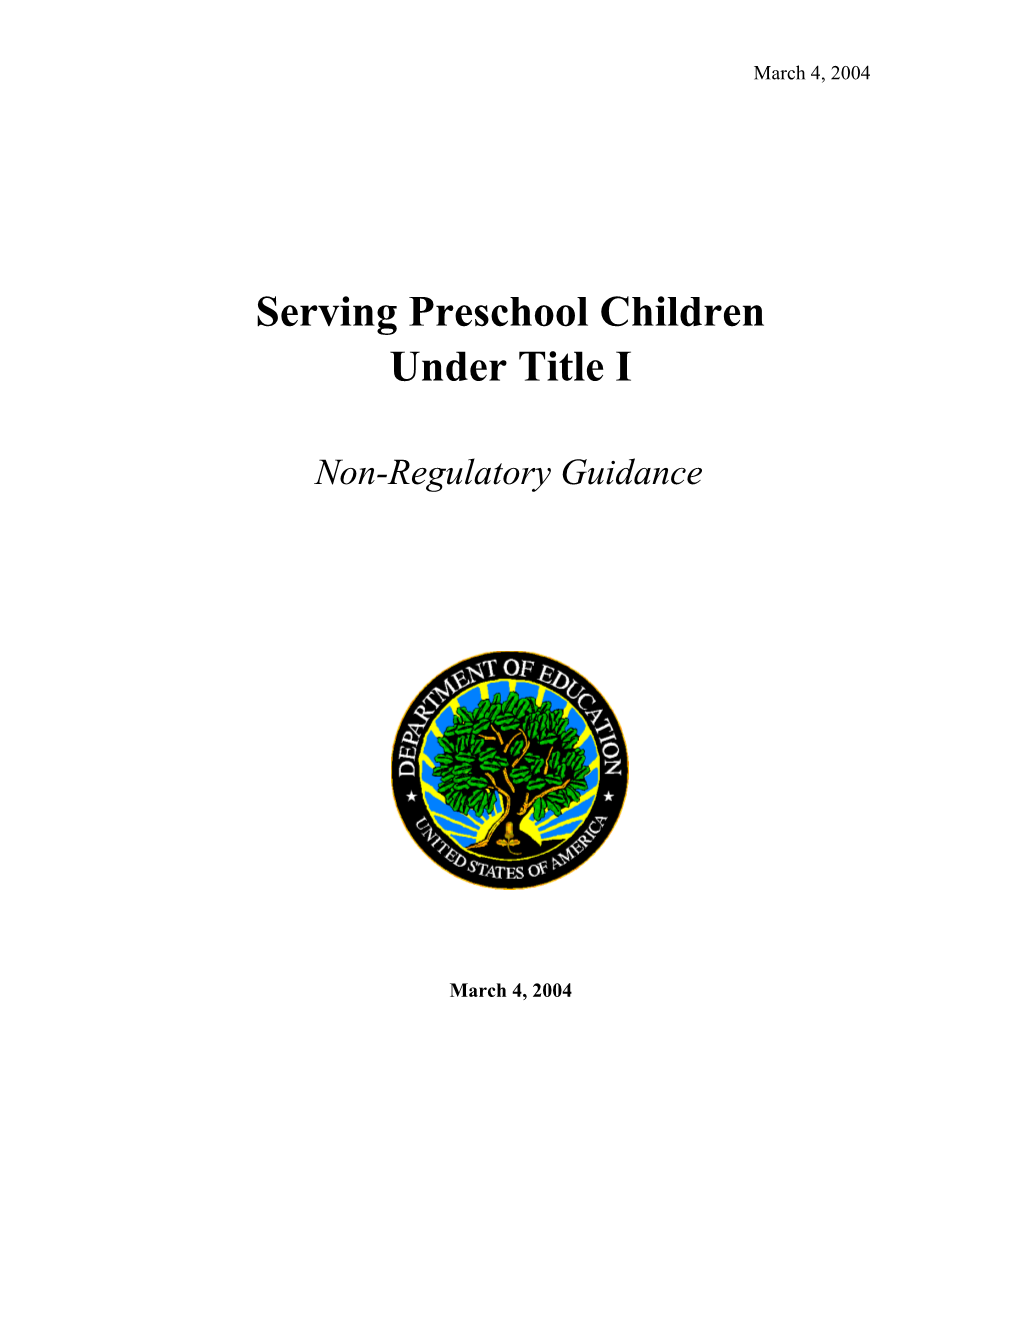 Serving Preschool Children Under Title I Non-Regulatory Guidance, March 4, 2004 (MS Word)